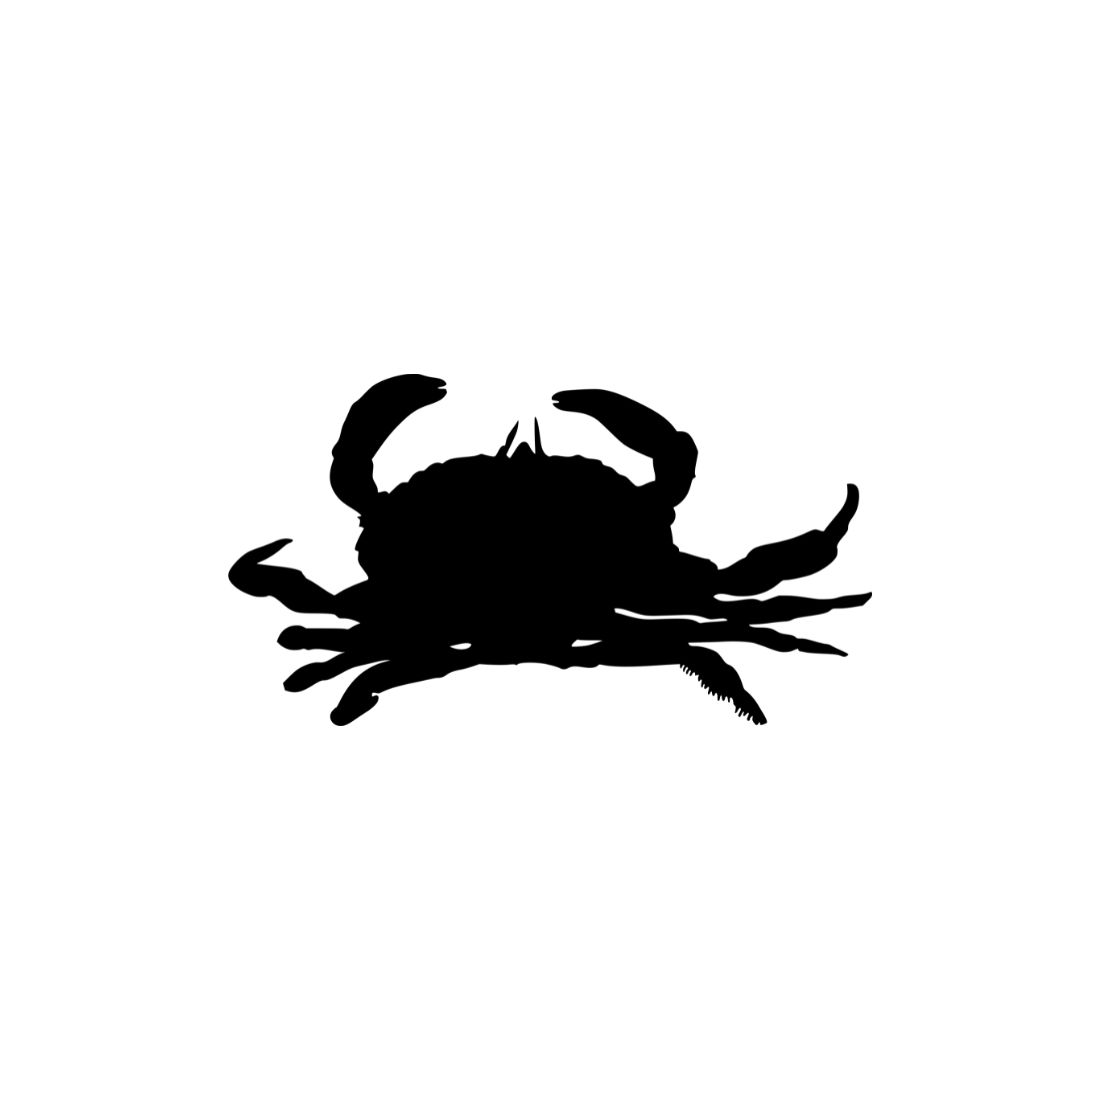 Crab Silhouette Bundles